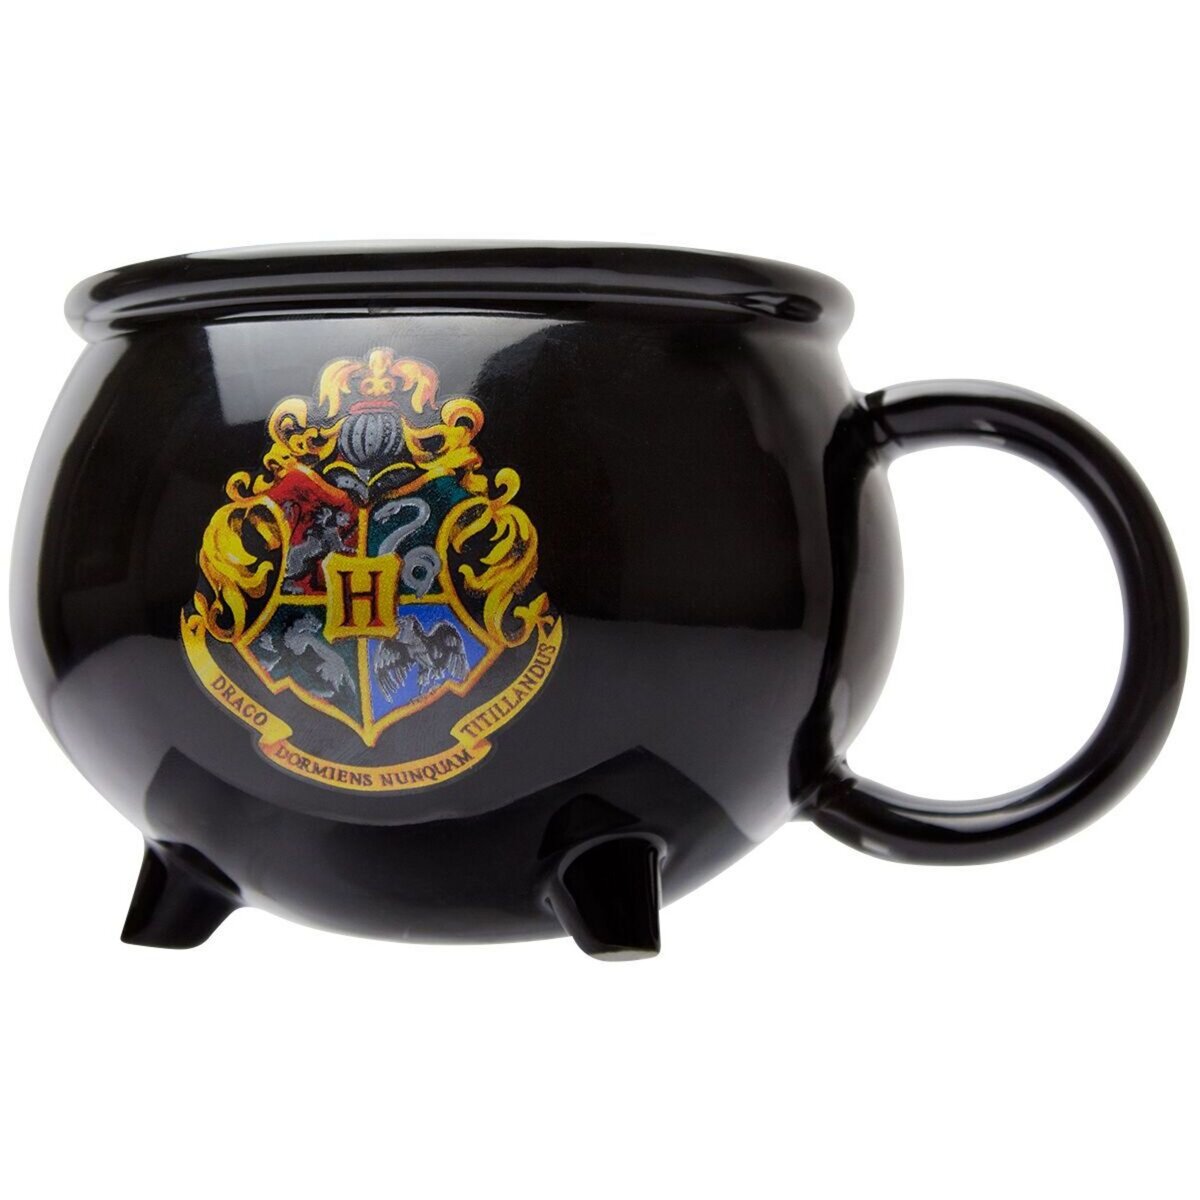 Mug chaudron de Poudlard de Harry Potter